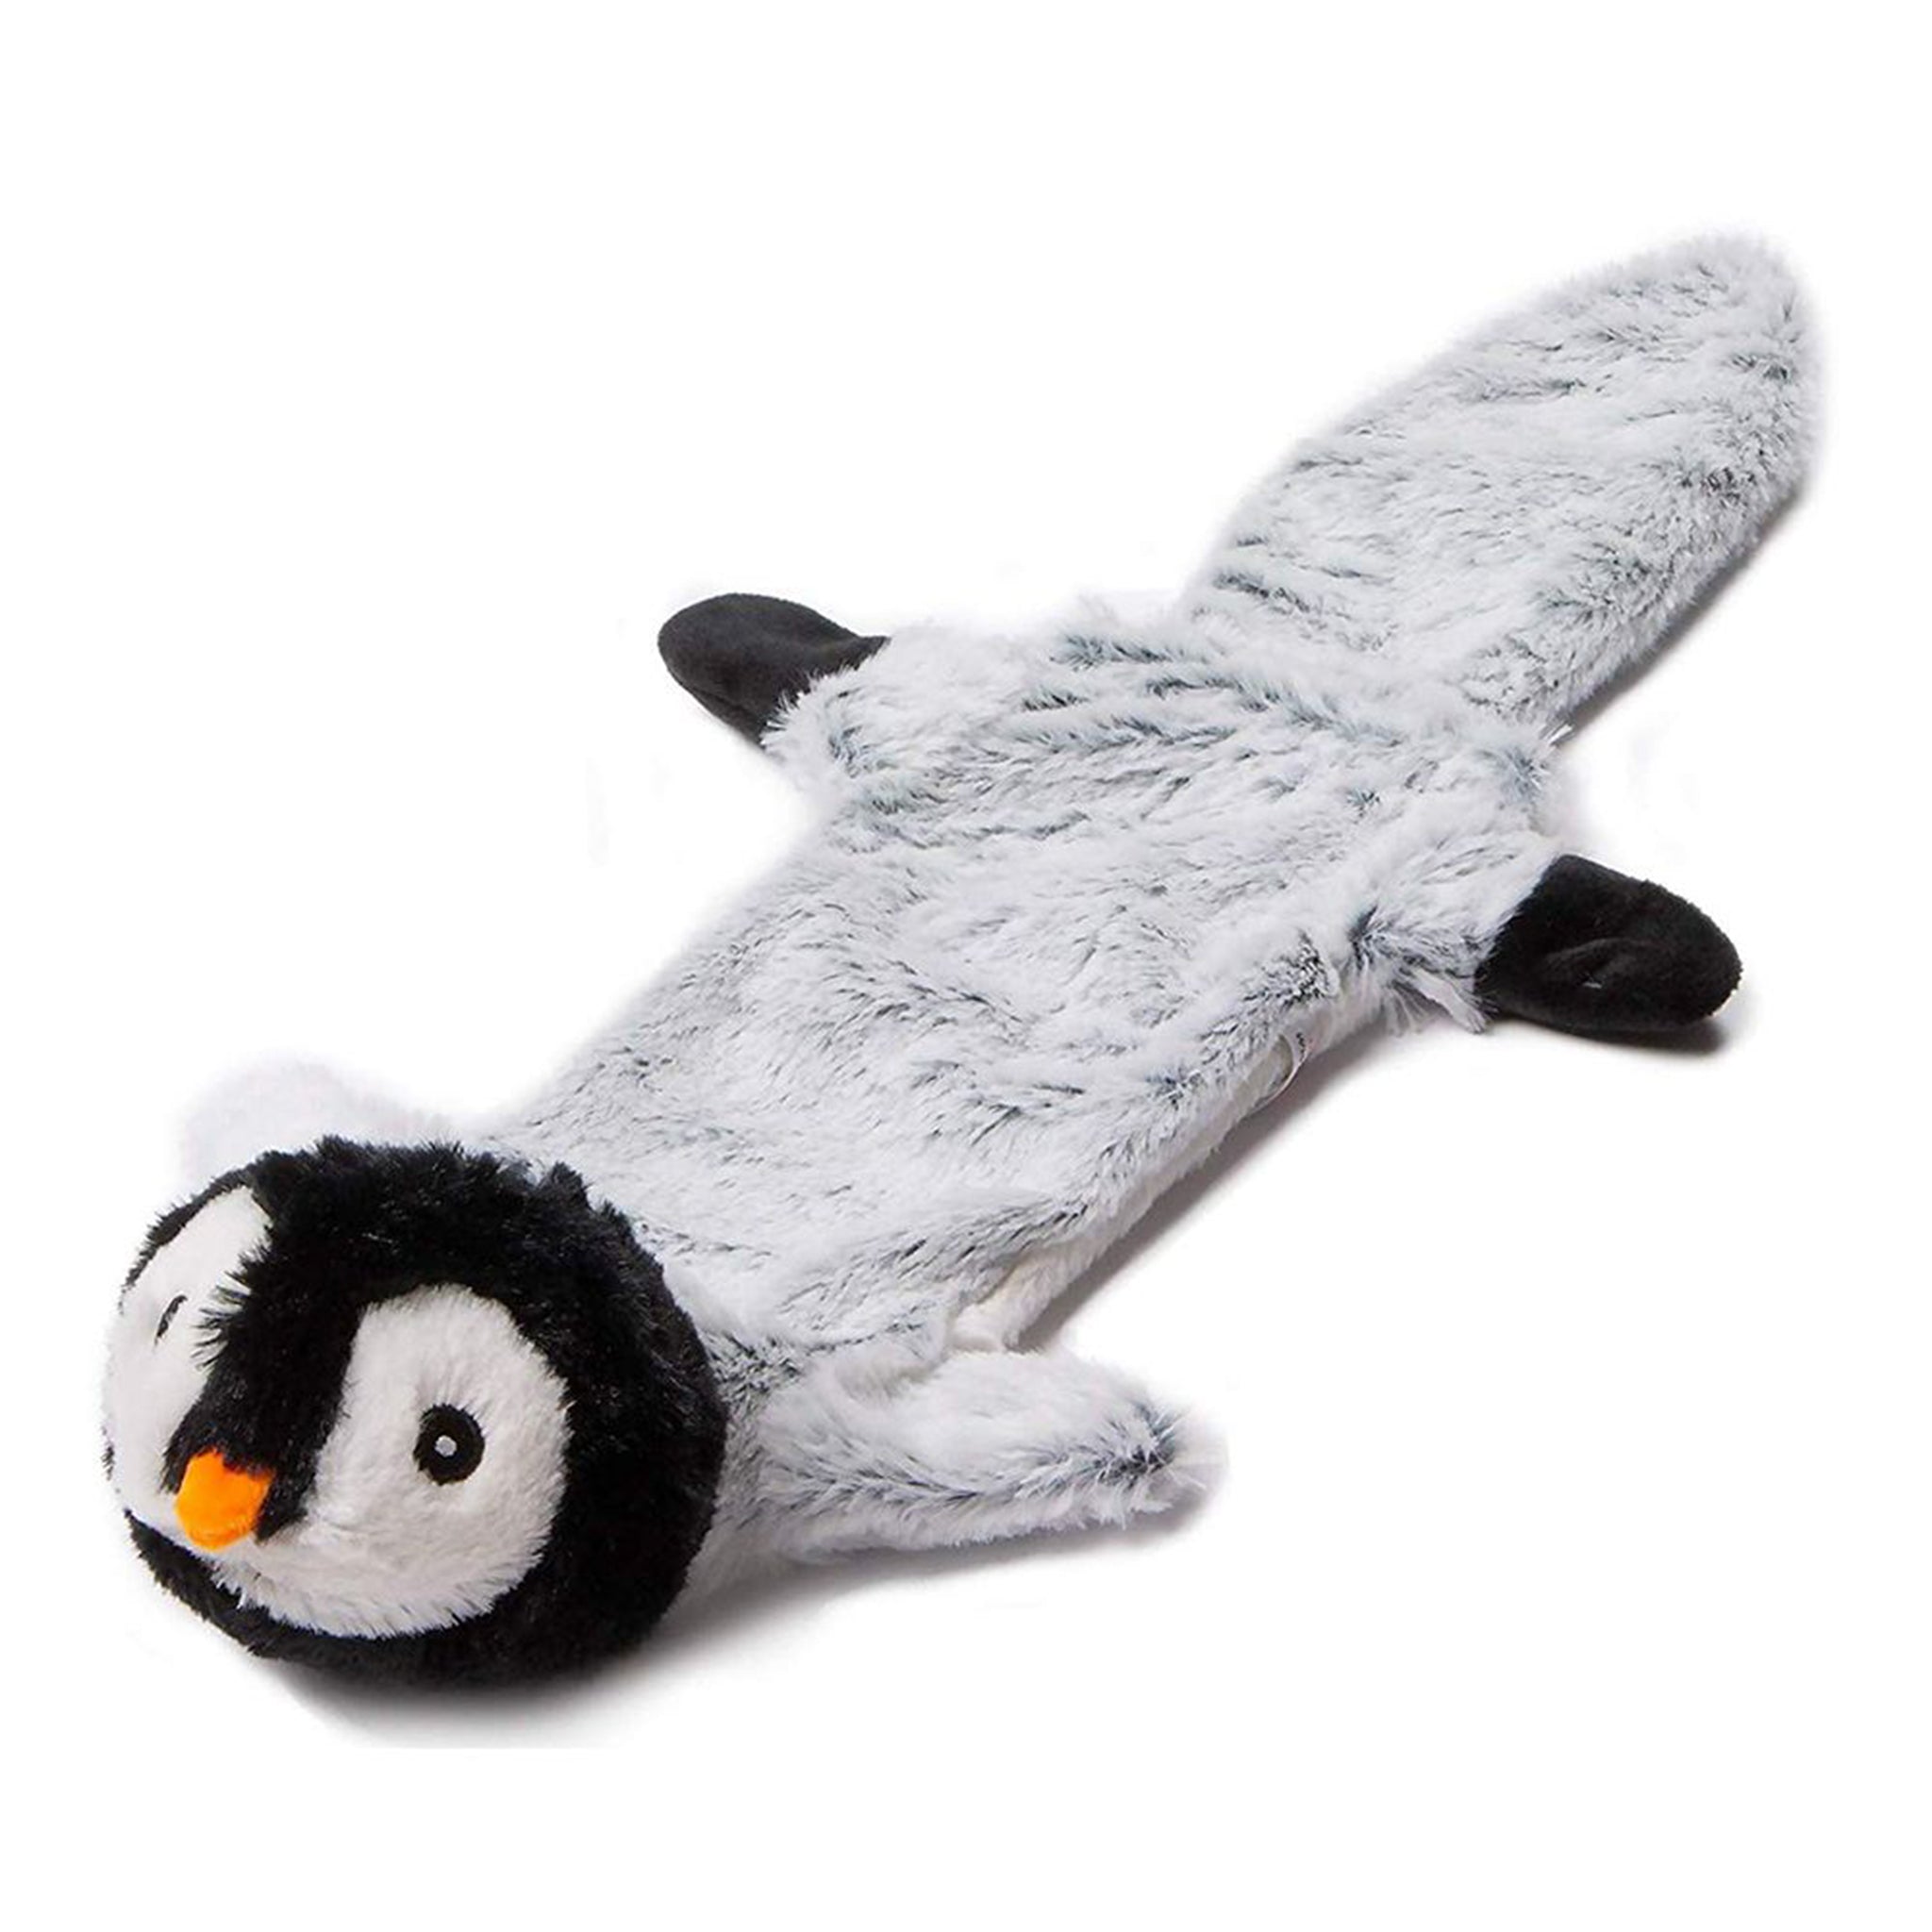  My Own Pet Balloons Penguin Animal : Toys & Games